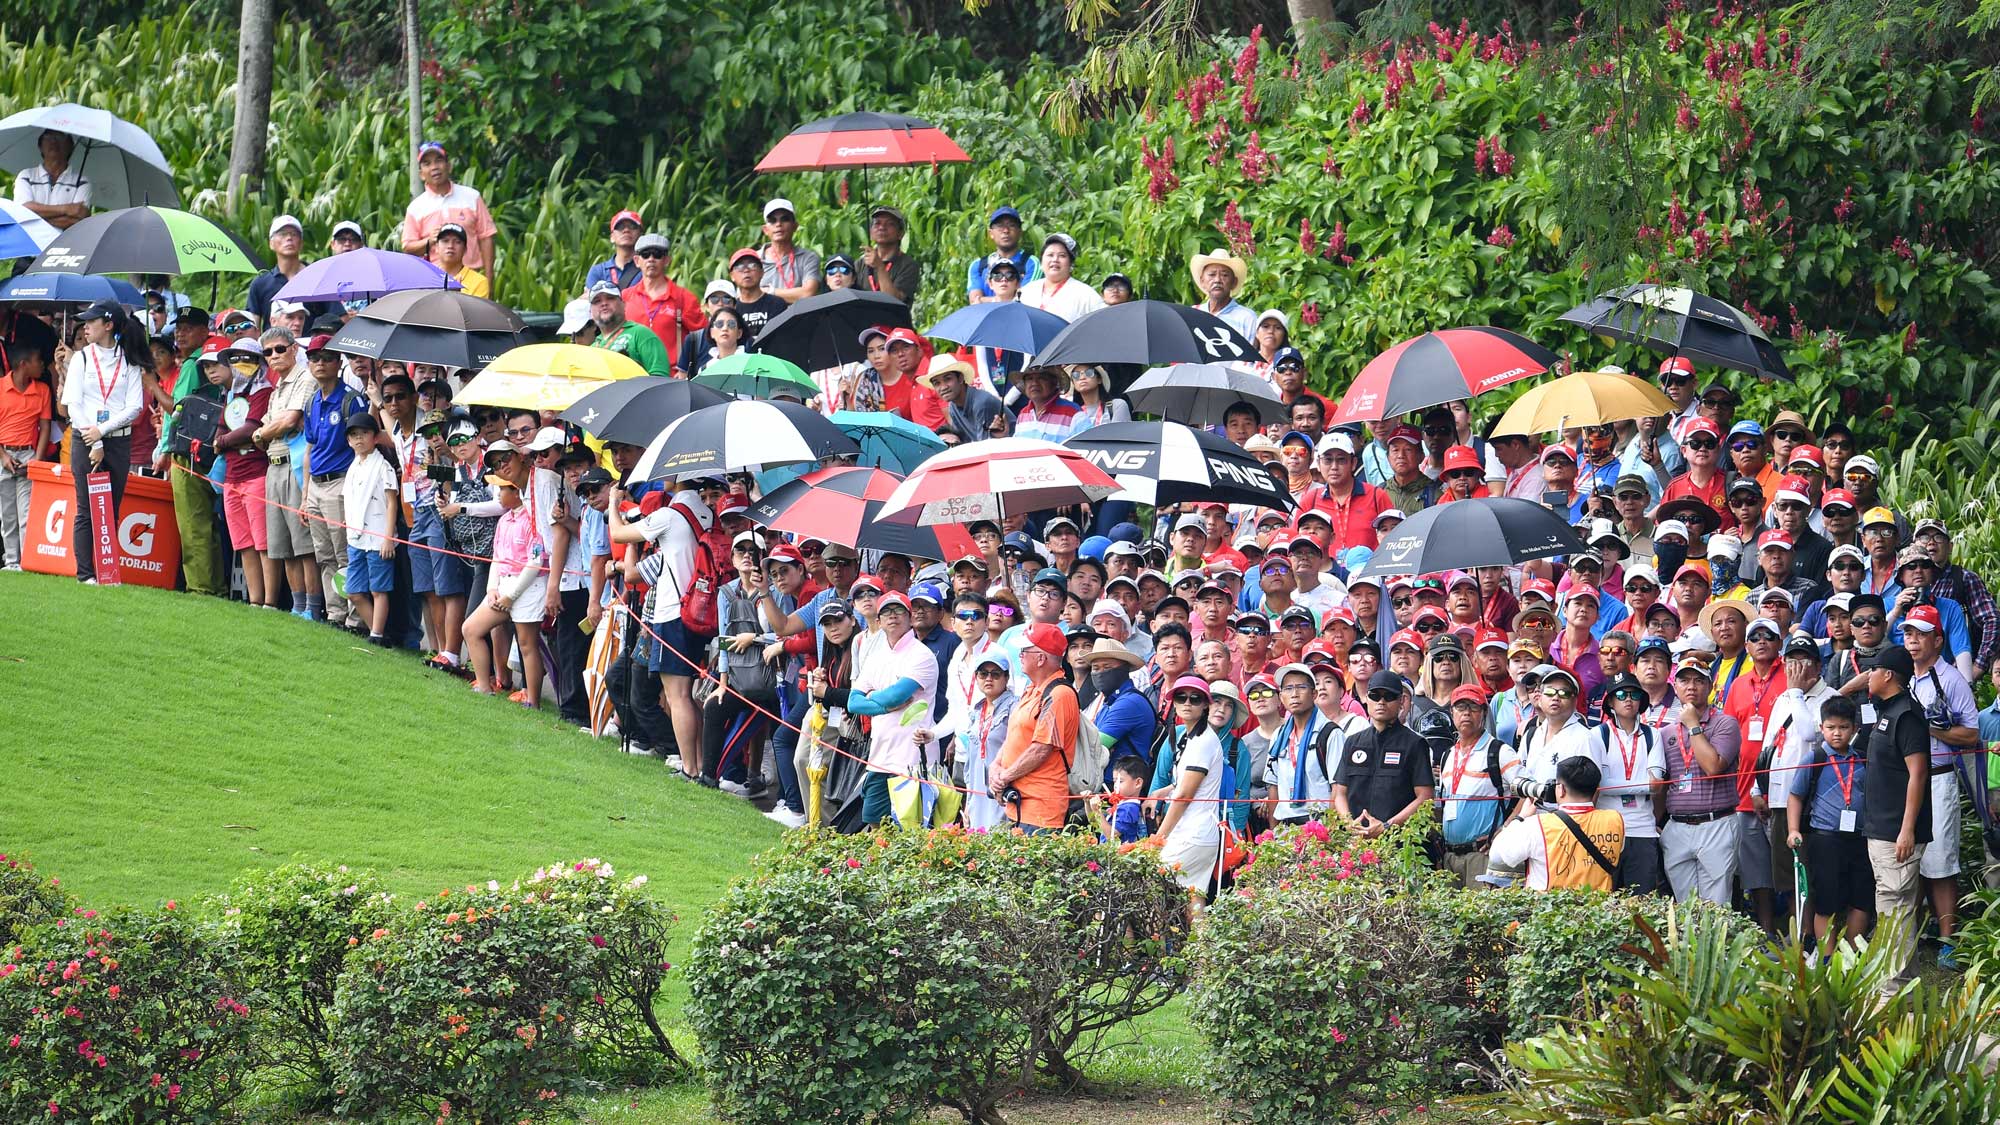 crowds gather at an LPGA golf event